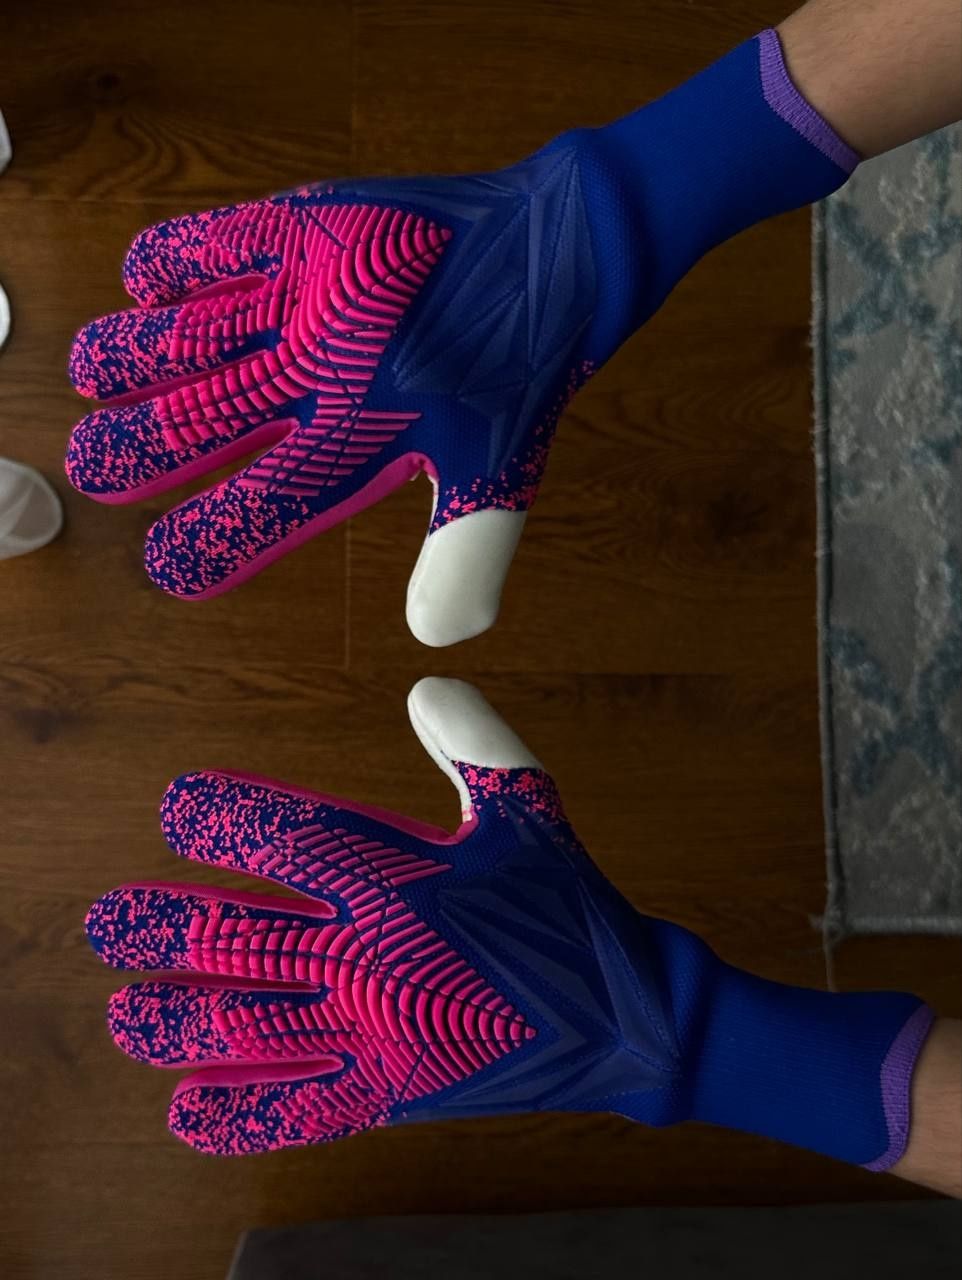 Adidas Predator Pro Вратарьские перчатки